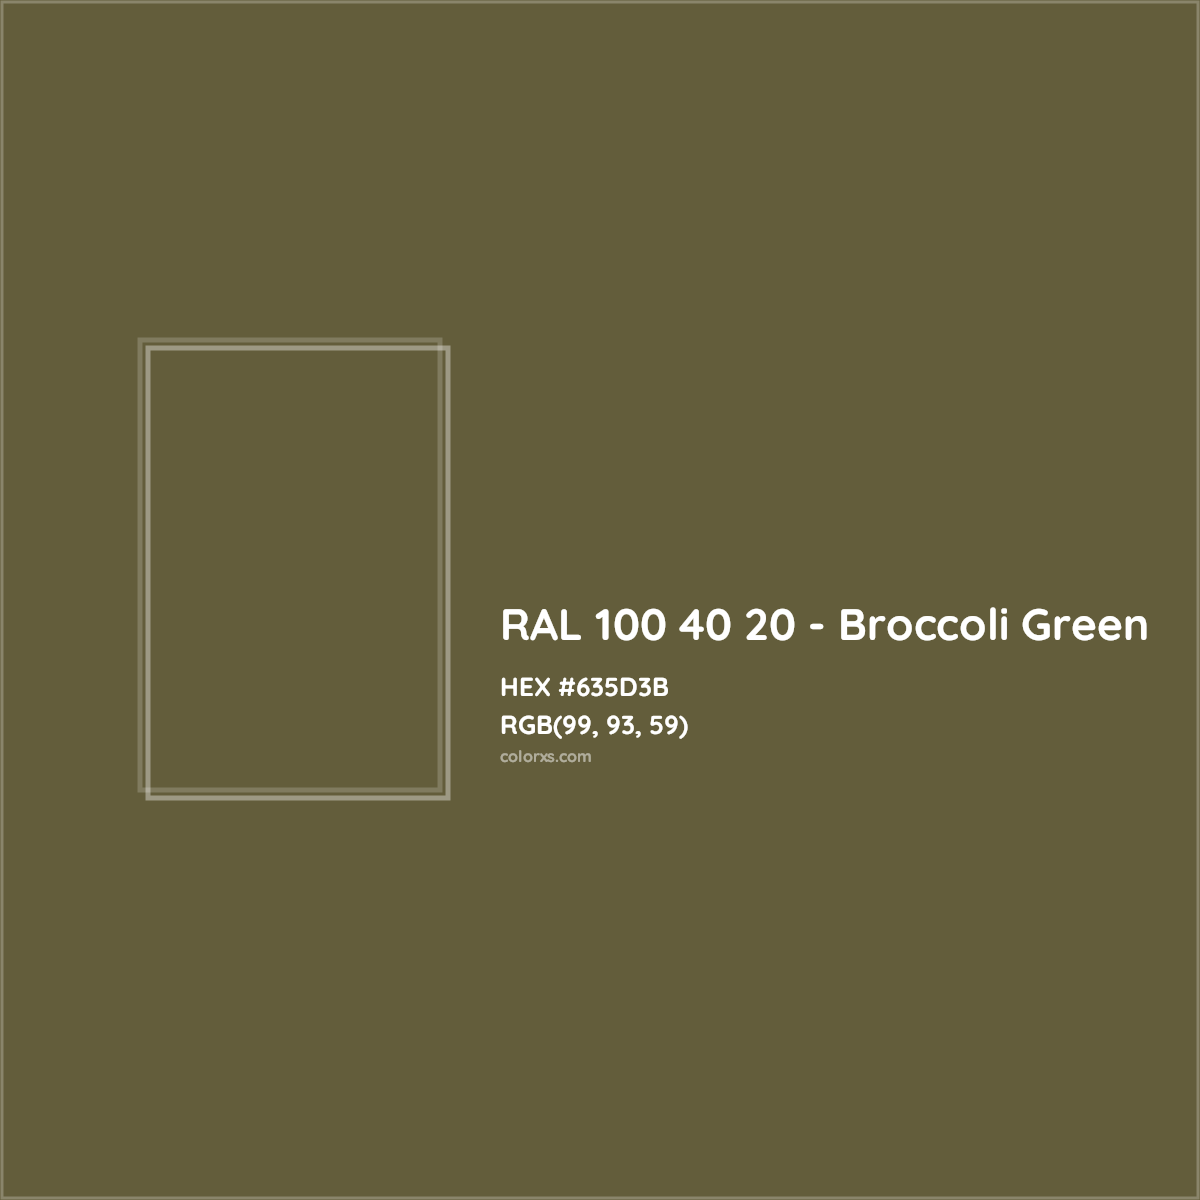 HEX #635D3B RAL 100 40 20 - Broccoli Green CMS RAL Design - Color Code